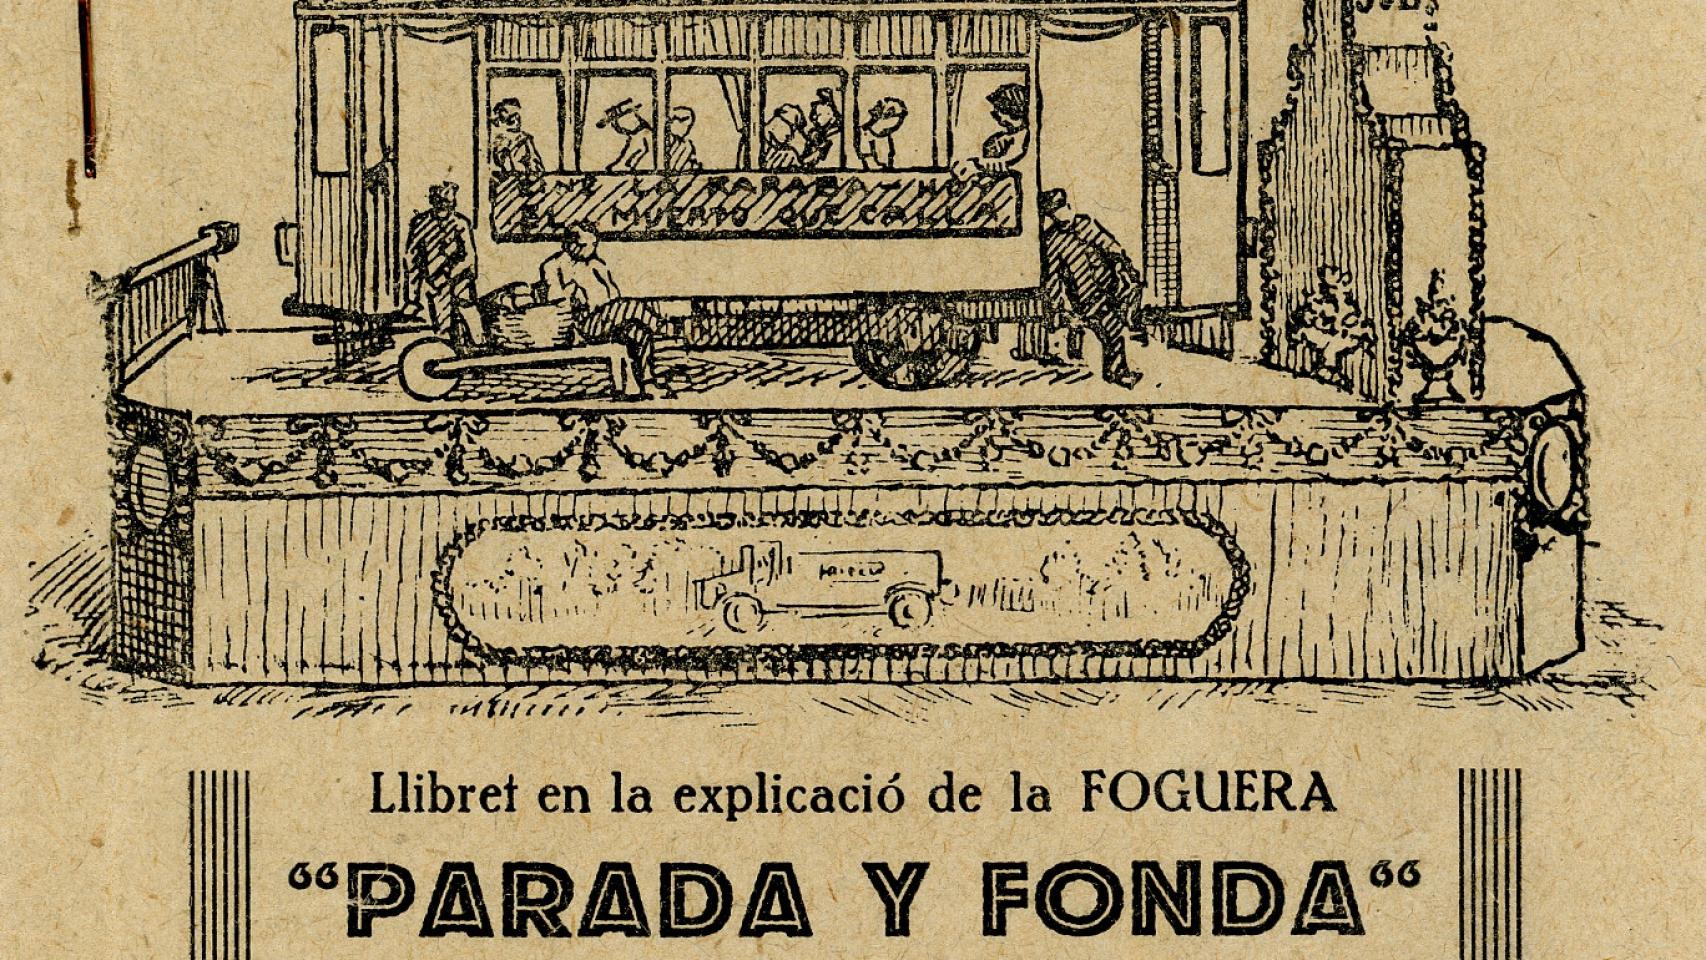 El llibret de Benalúa en 1928, que explicaba el lema 'Parada y fonda'.